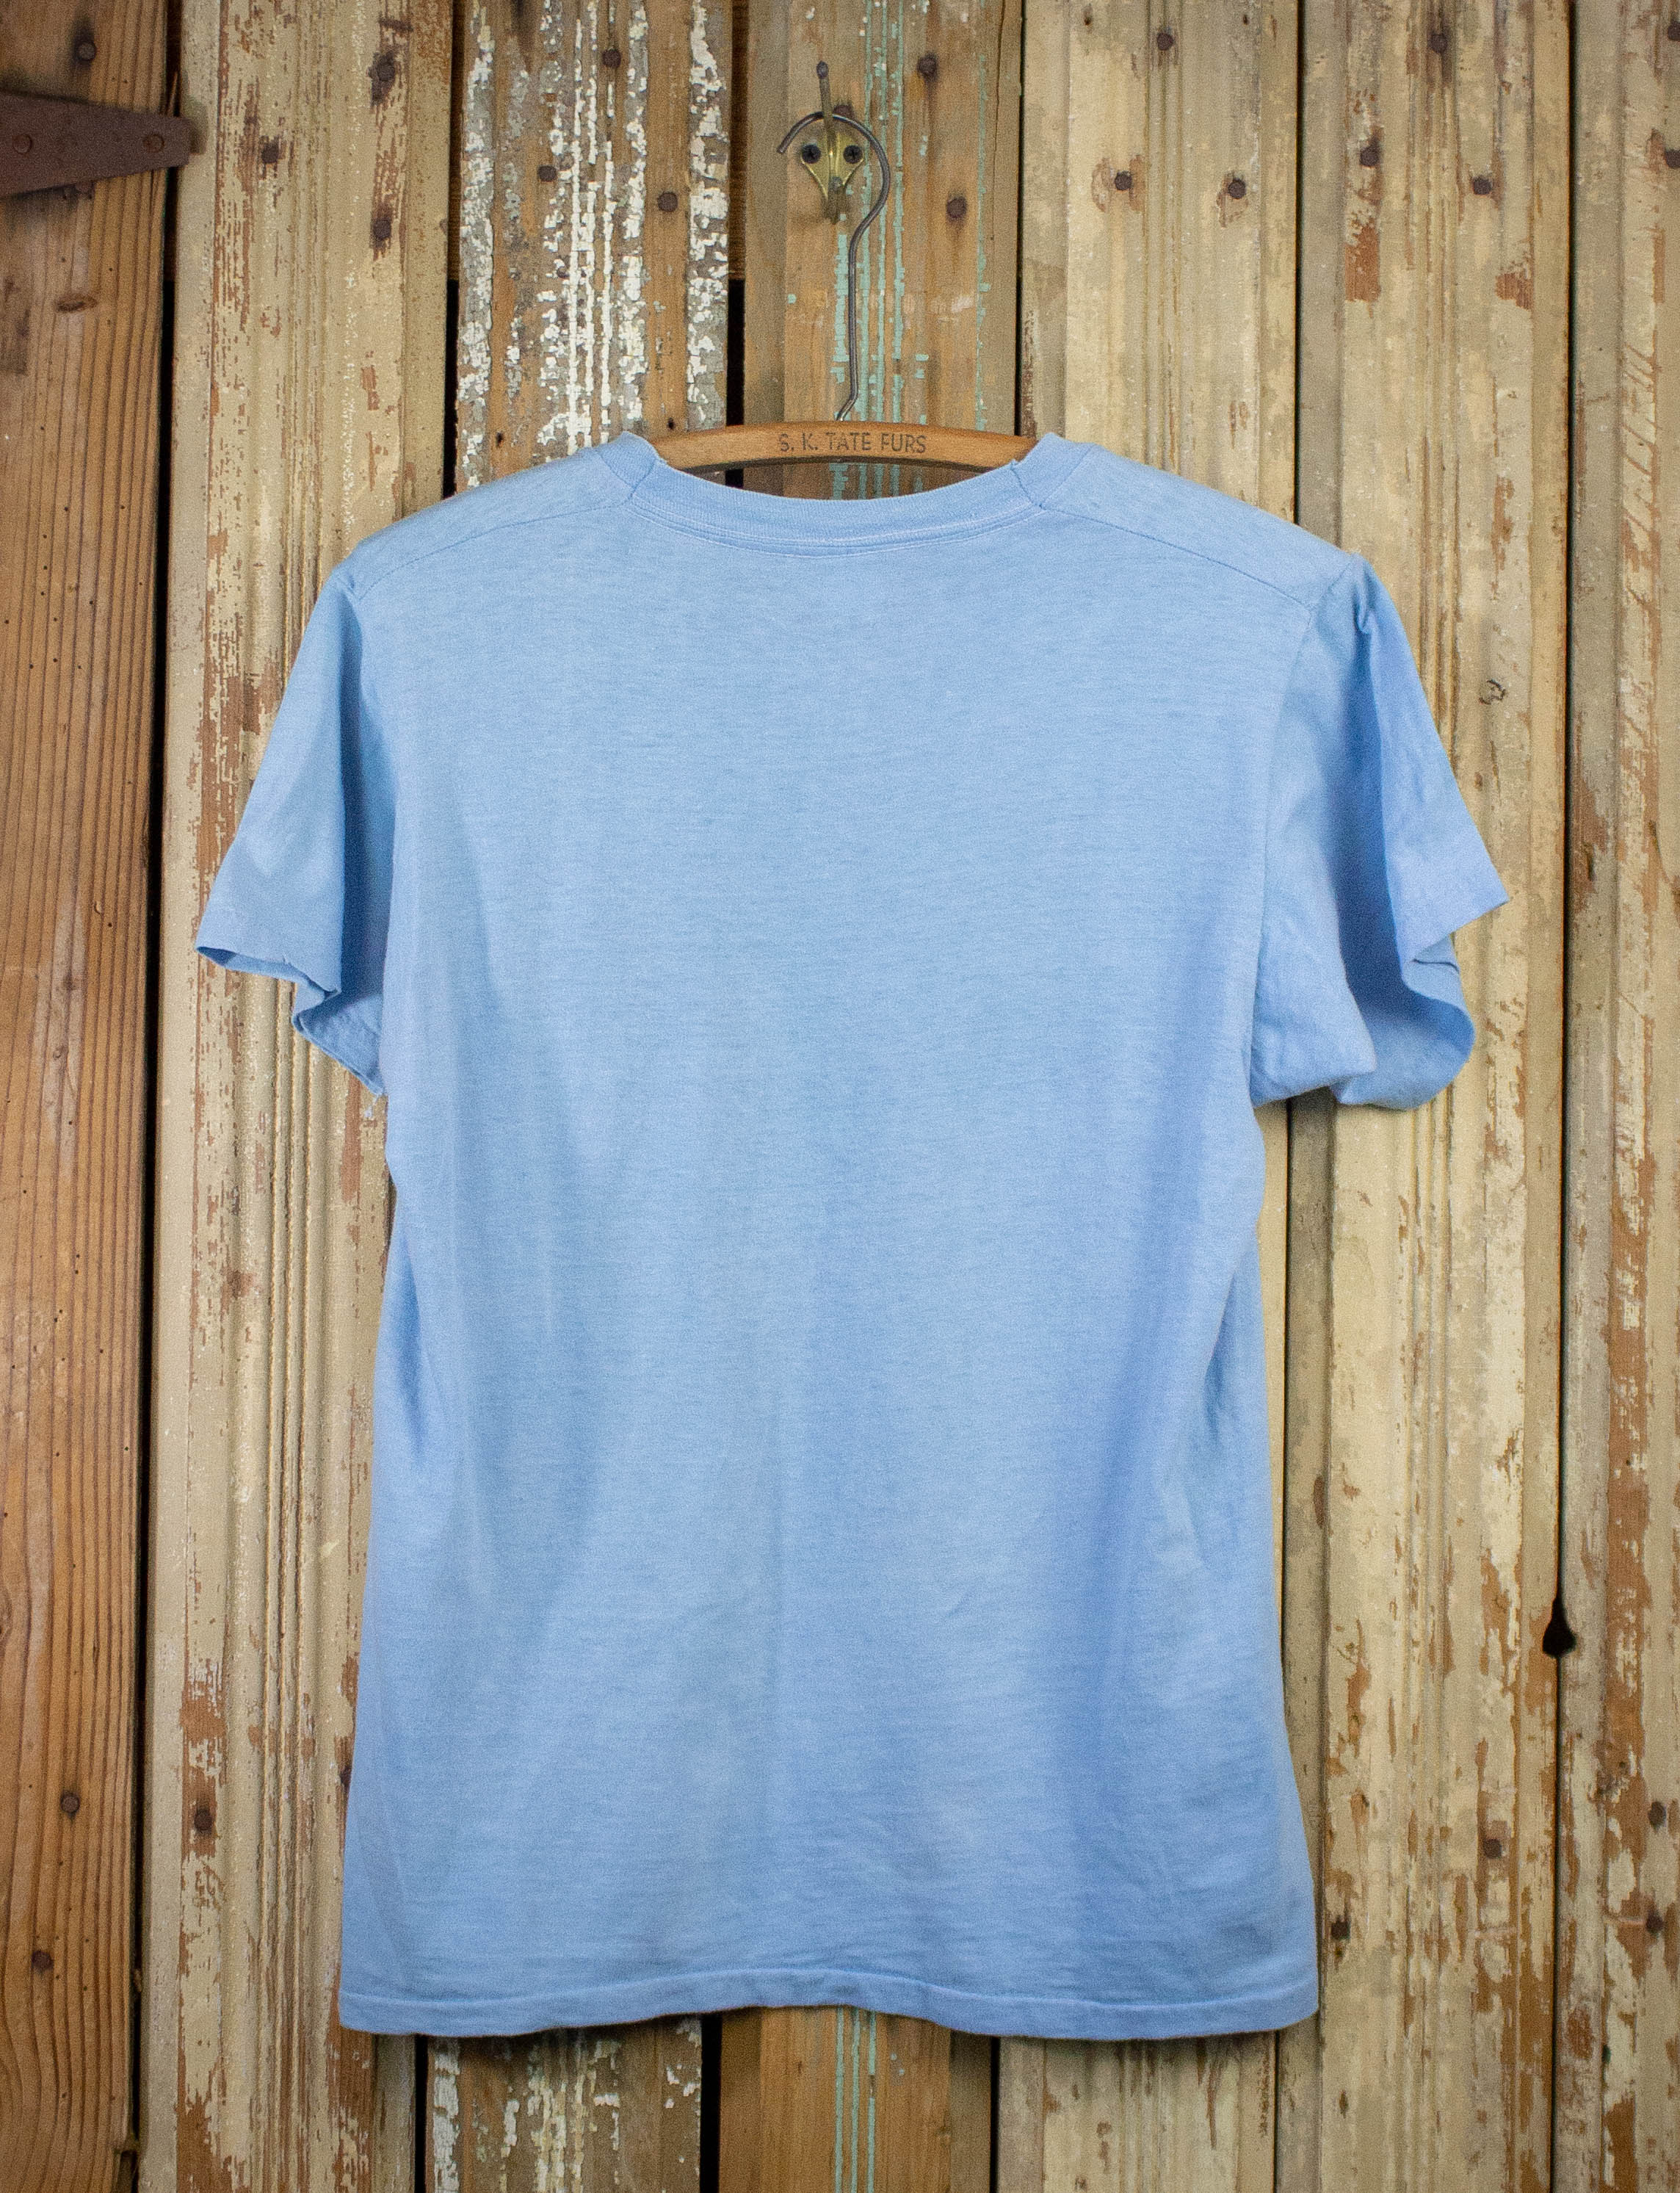 Vintage Universal Studios Graphic T Shirt 70s Blue Small